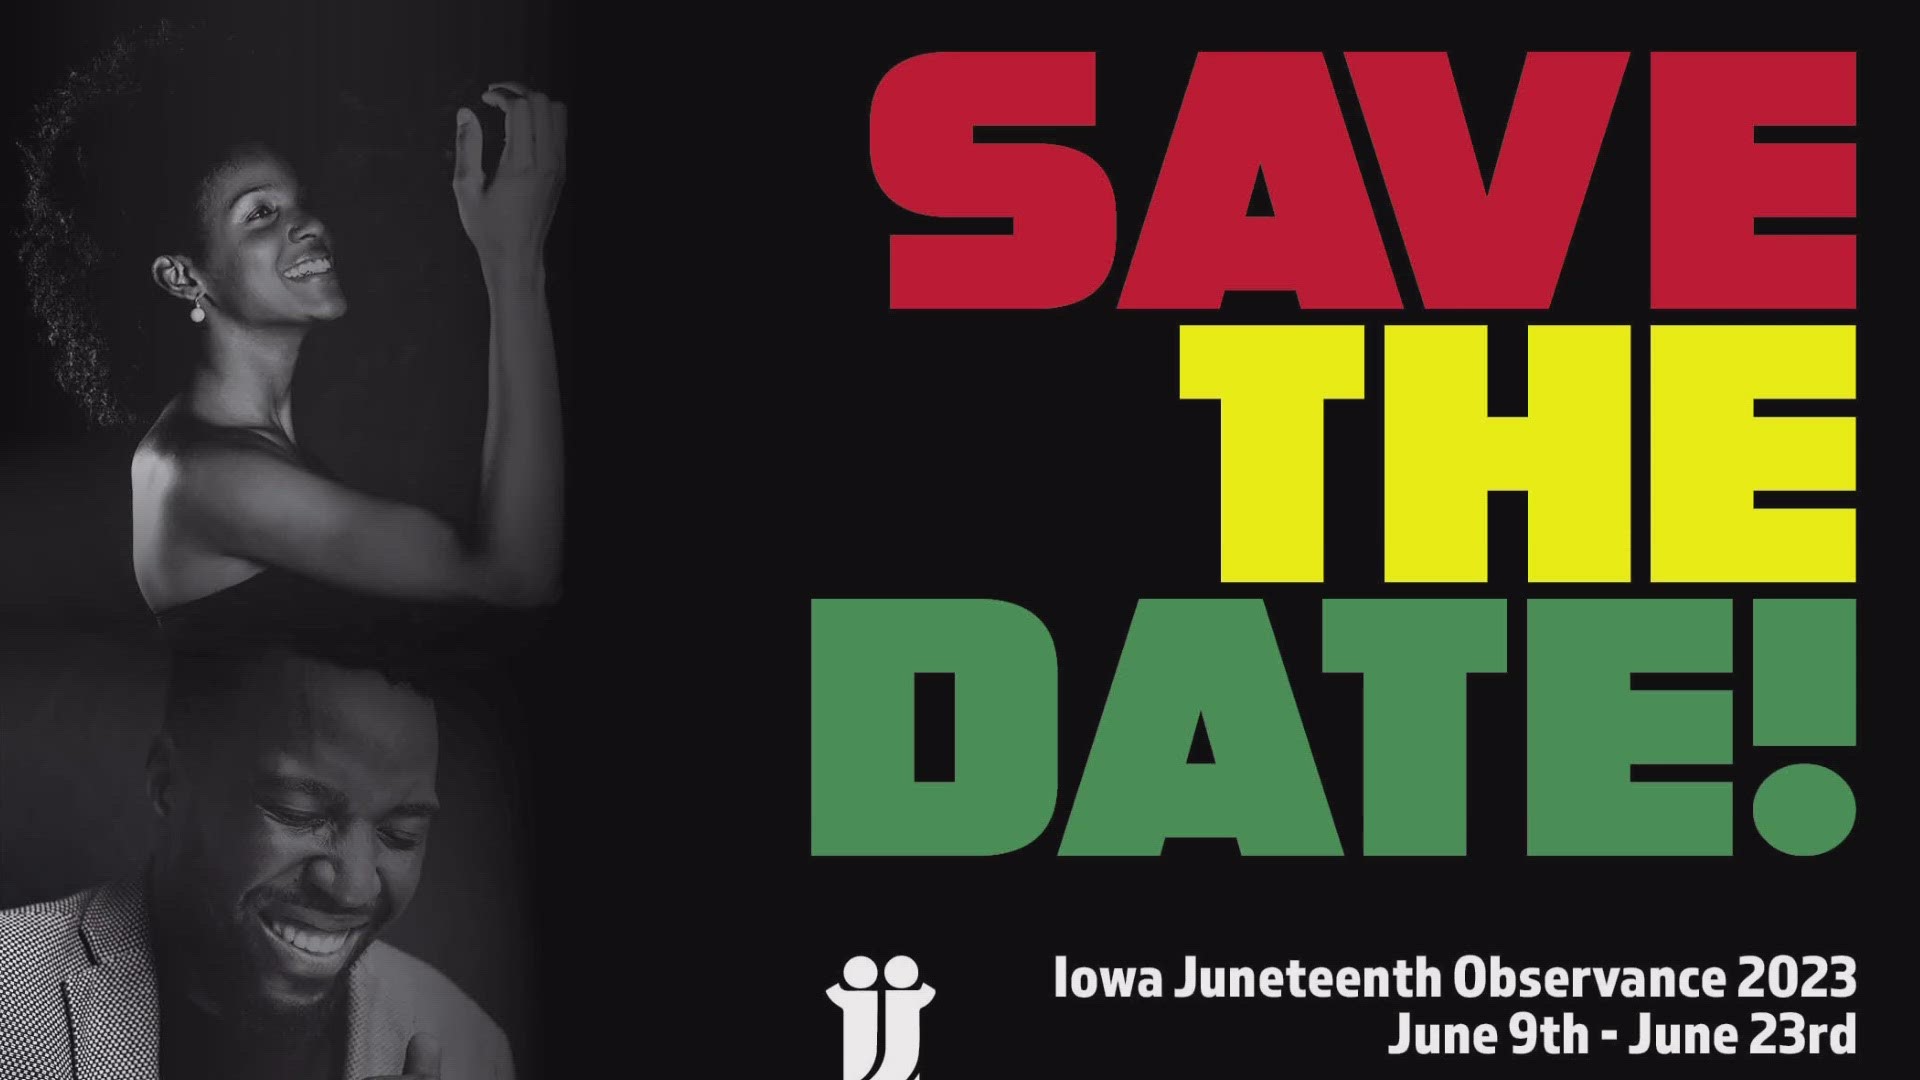 The Iowa Juneteenth Observance is June 9-23, 2023.